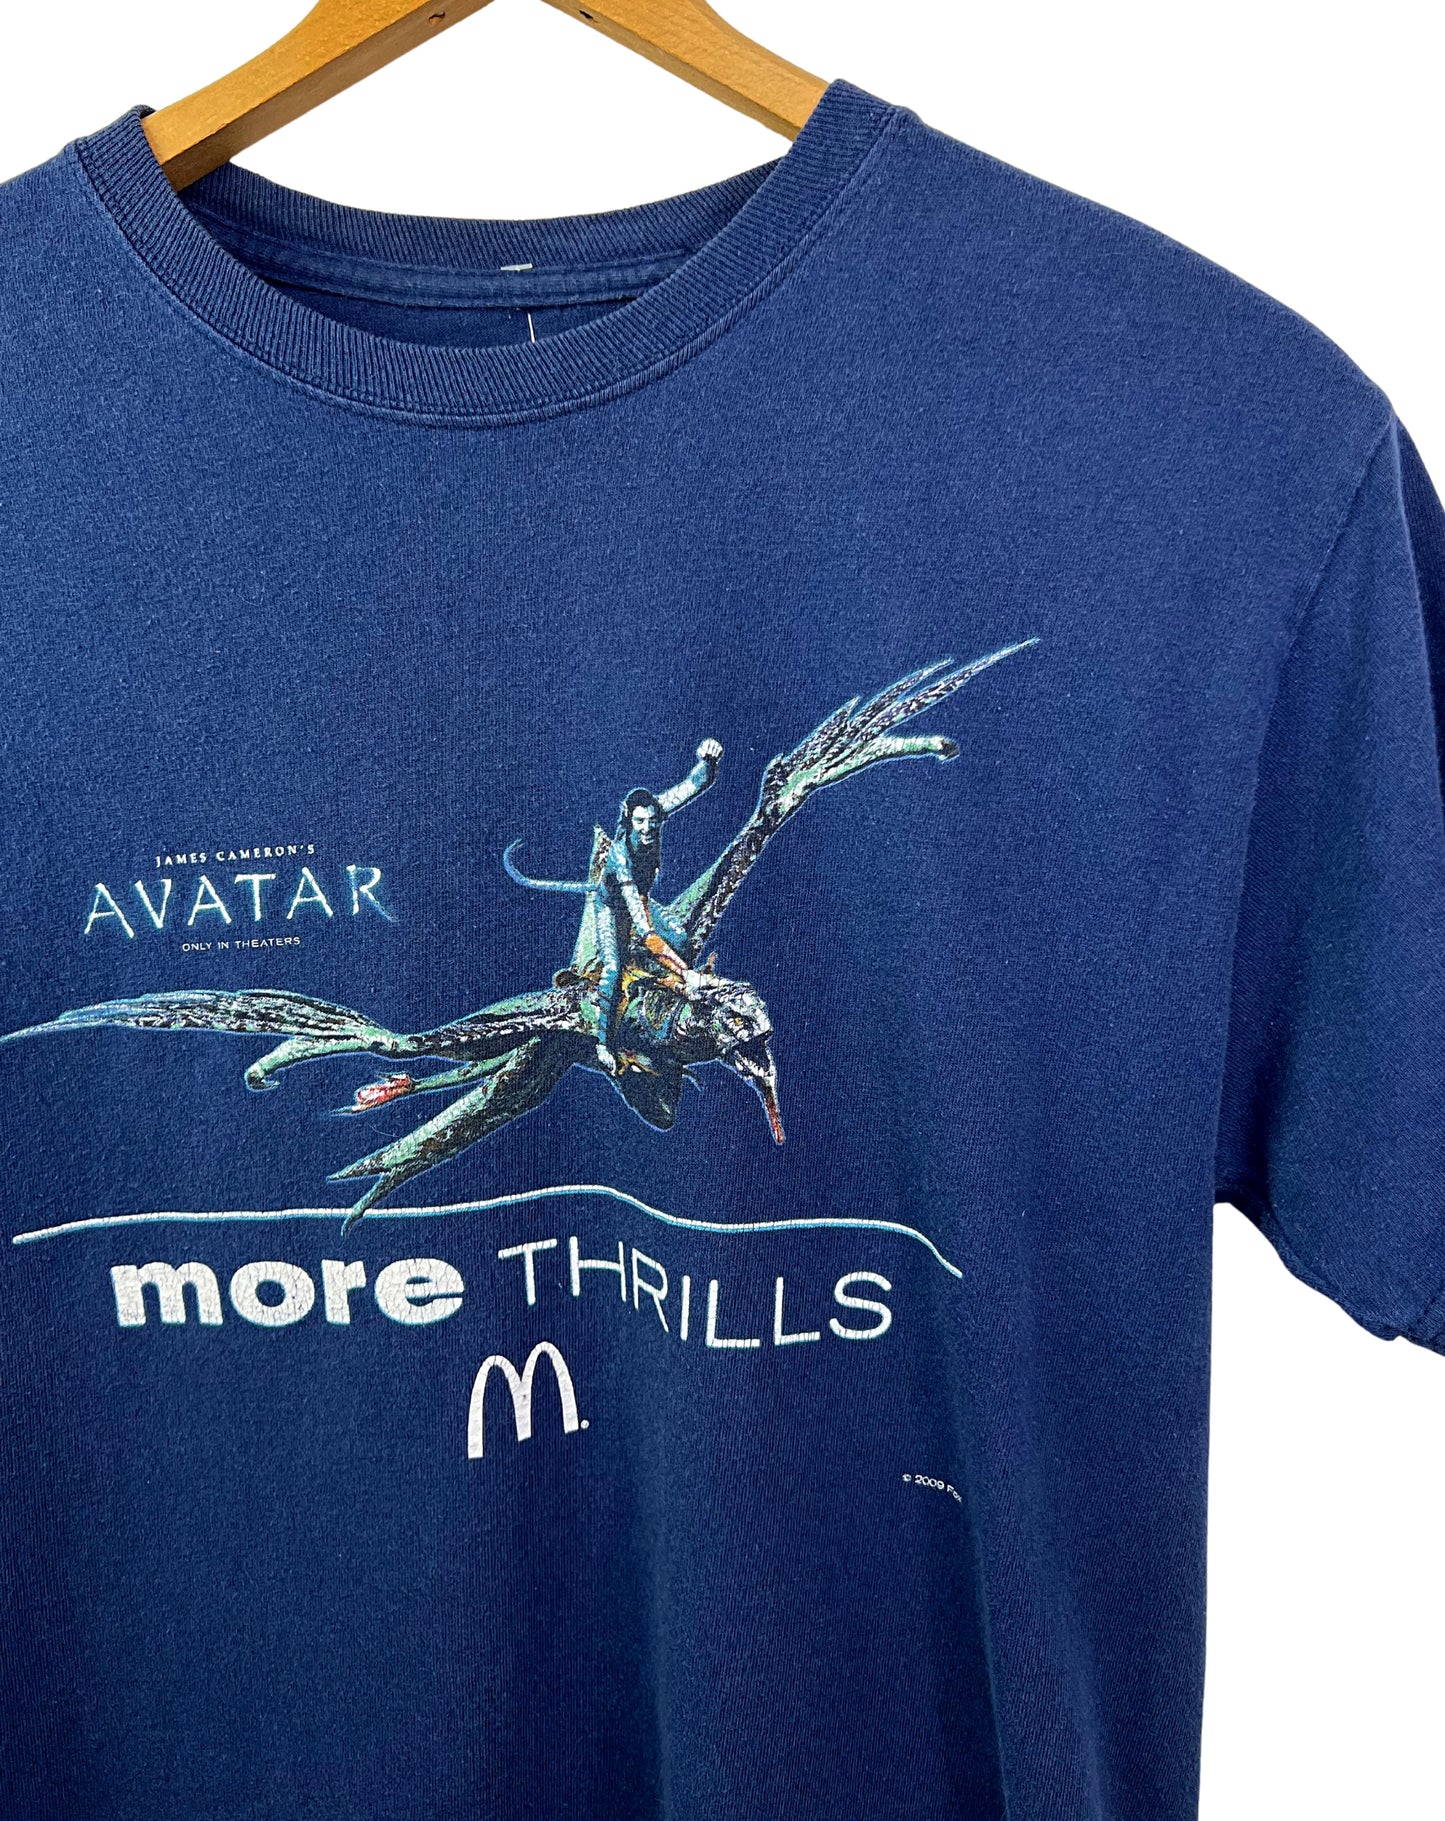 2009 Avatar x McDonalds More Thrills Promotional Movie Tshirt Size Small